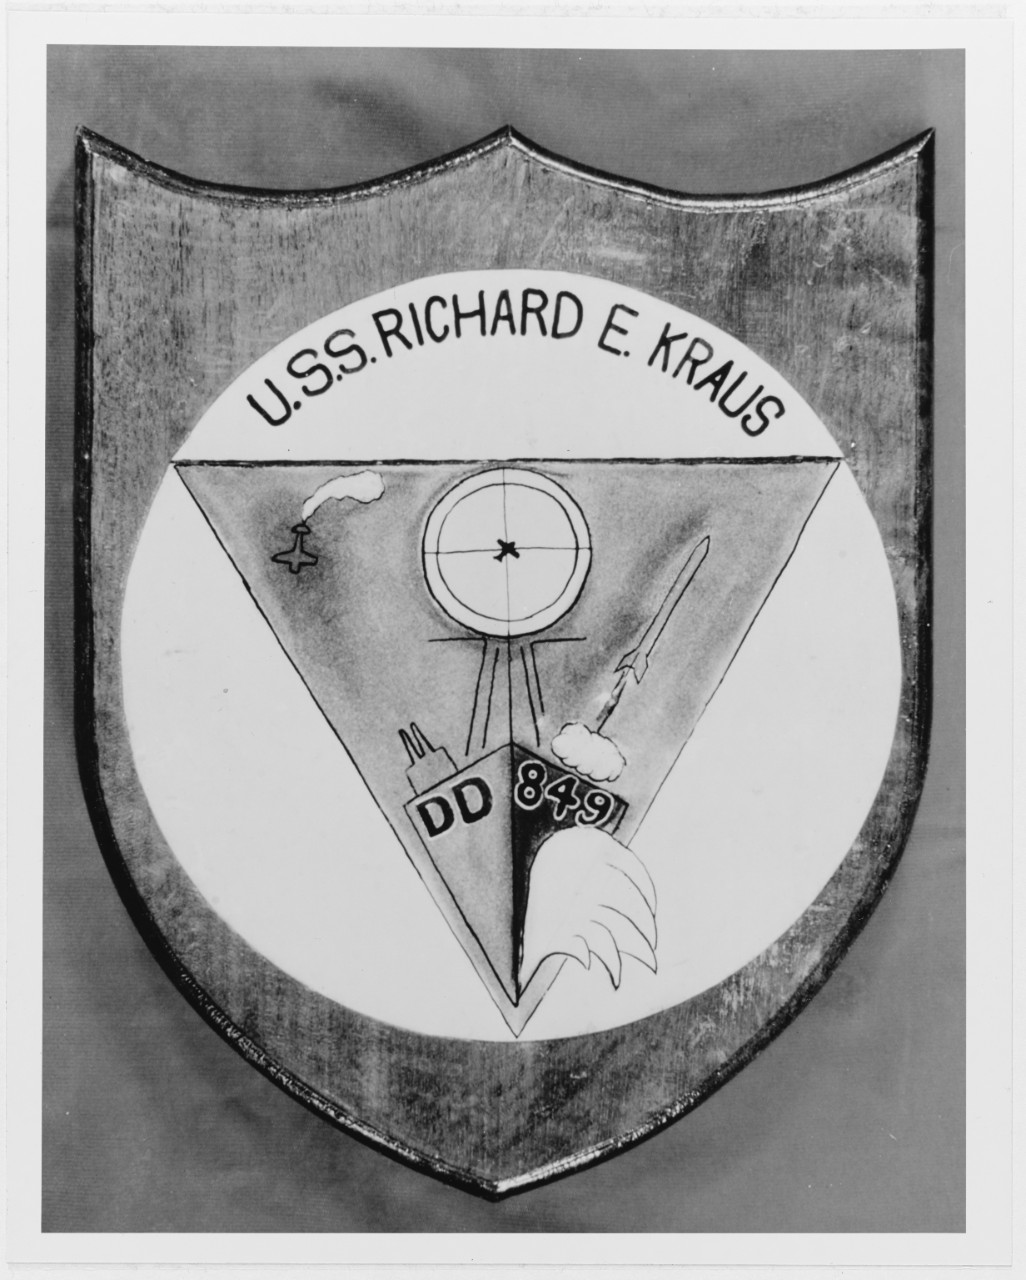 Insignia:  USS RICHARD E. KRAUS (DD-849)